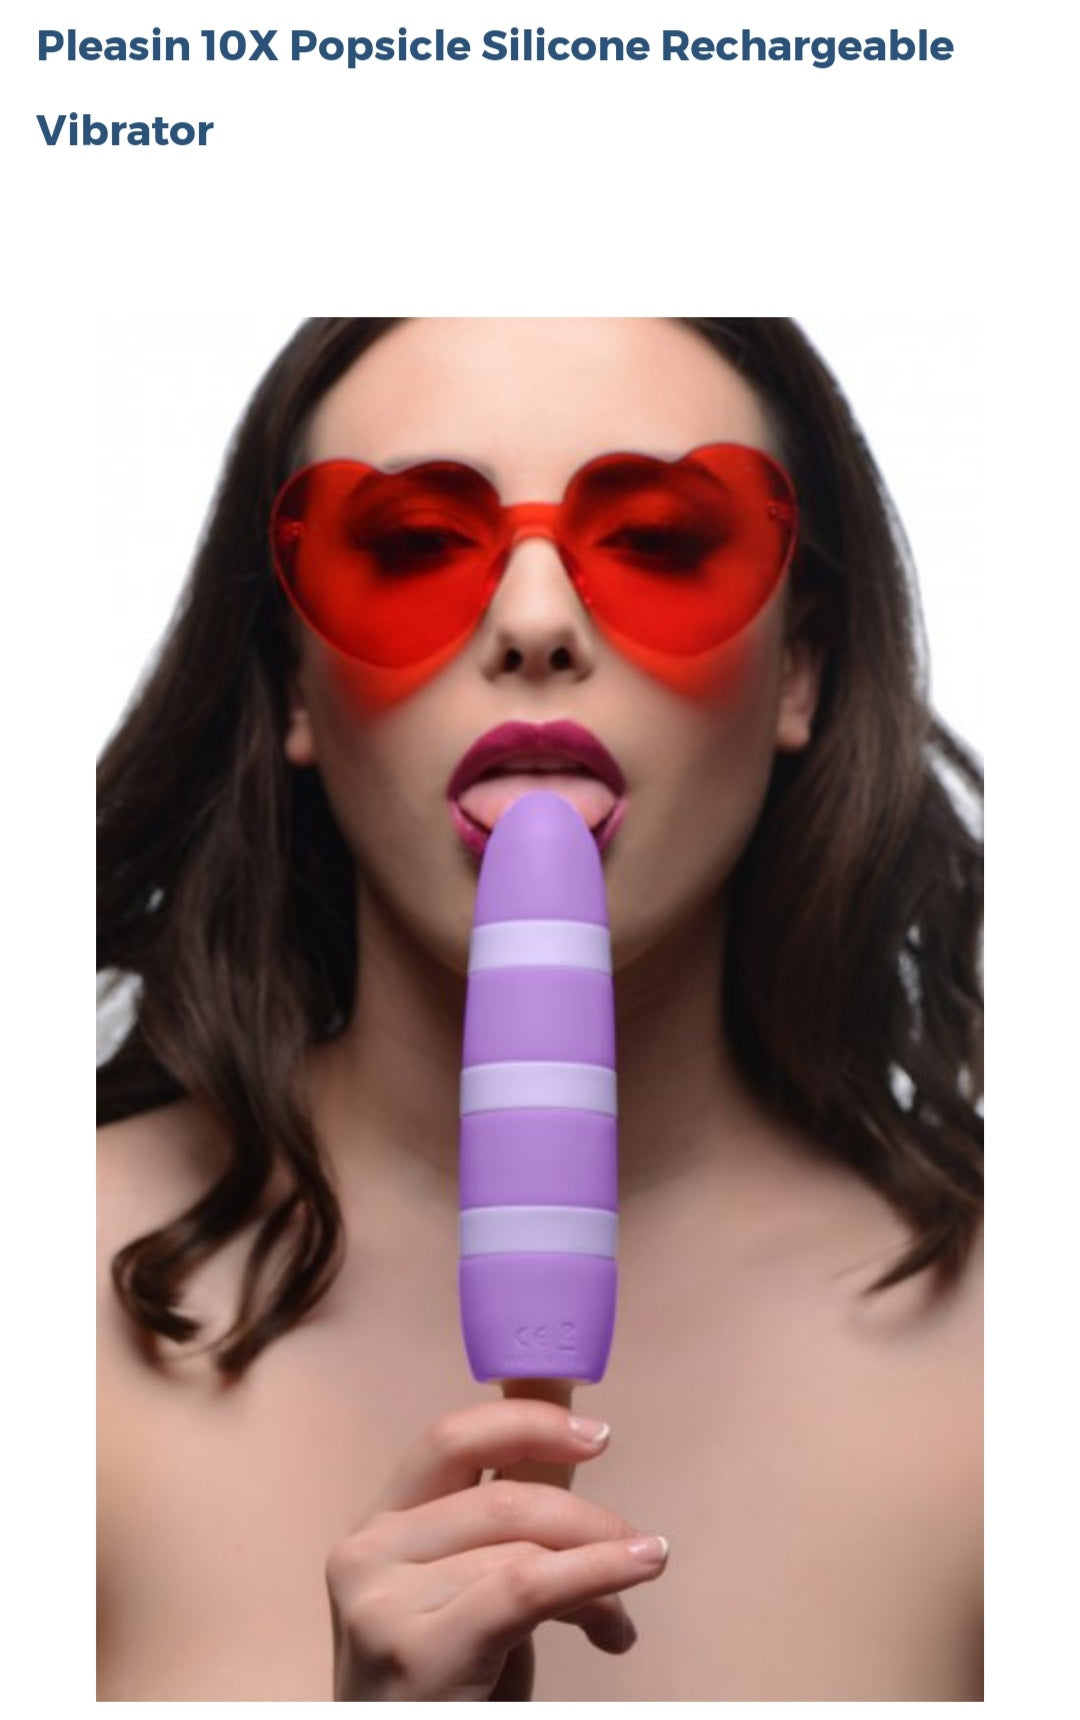 Fizzin 10x Popsicle Silicone Rechargeable-Purple Vibrator